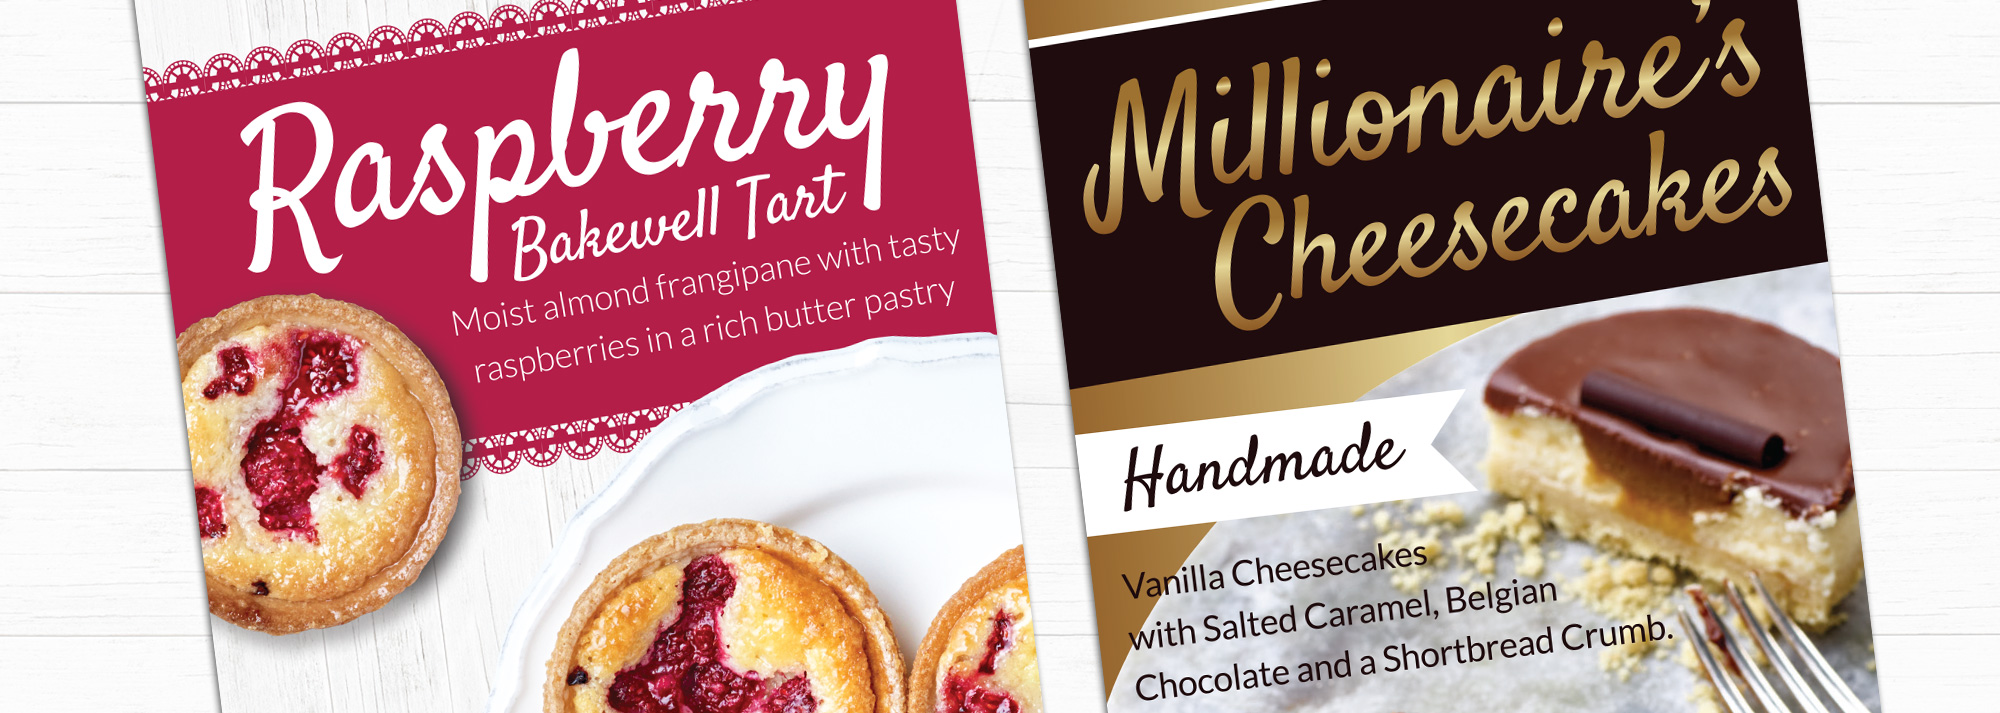 Our work marston foods bakewell tart packaging design